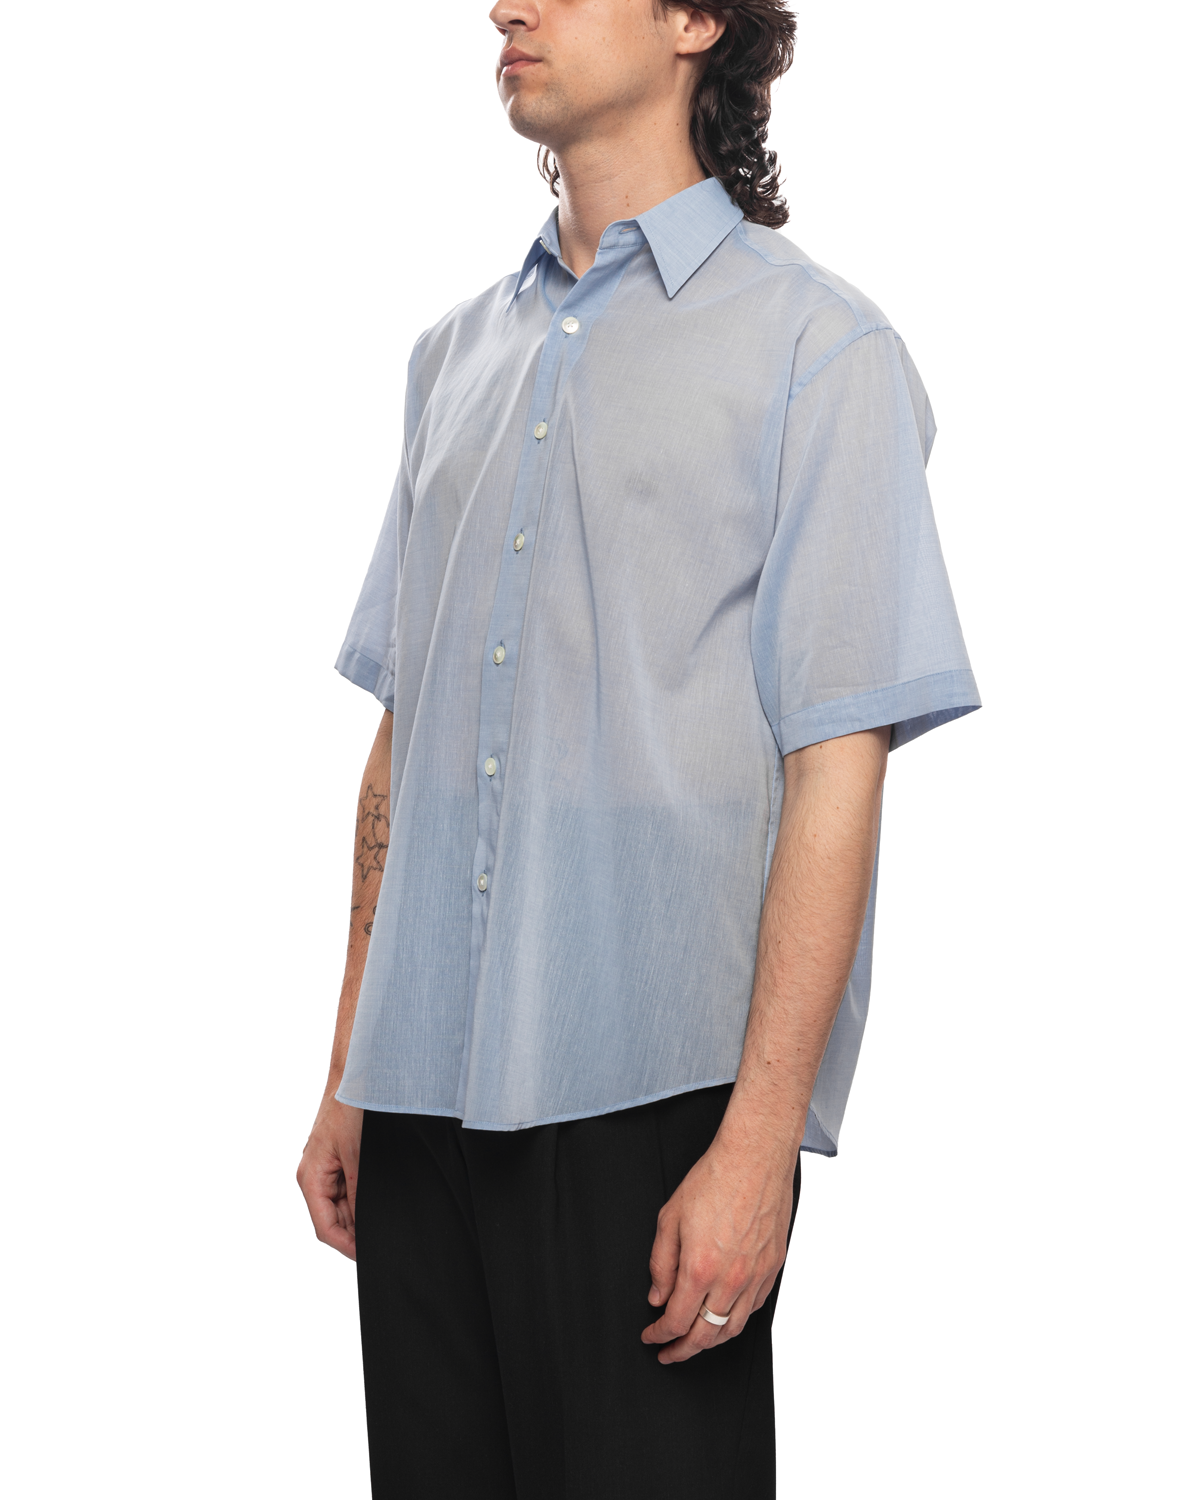 Hard Twist Finx Organdy Half Sleeved Shirt Sax Blue Chambray